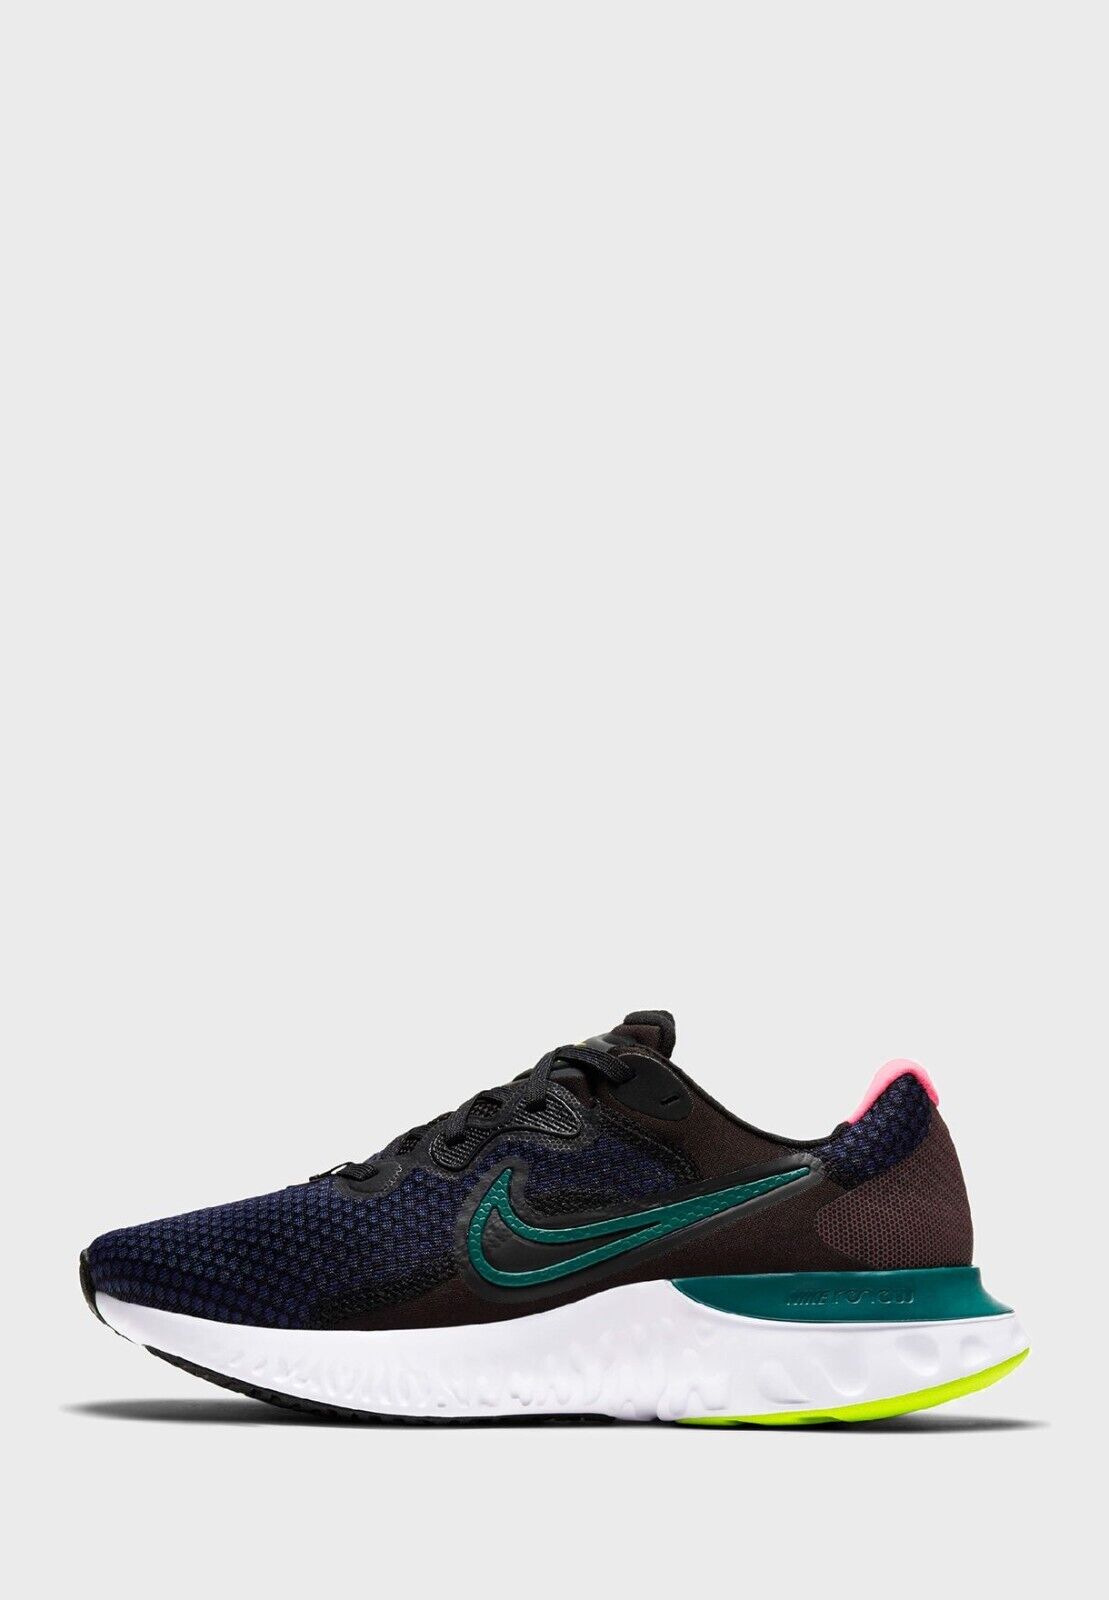 Women's Nike Renew Run 2 Running Shoes, CU3505 004 Multi Sizes Black/Blackened Blue